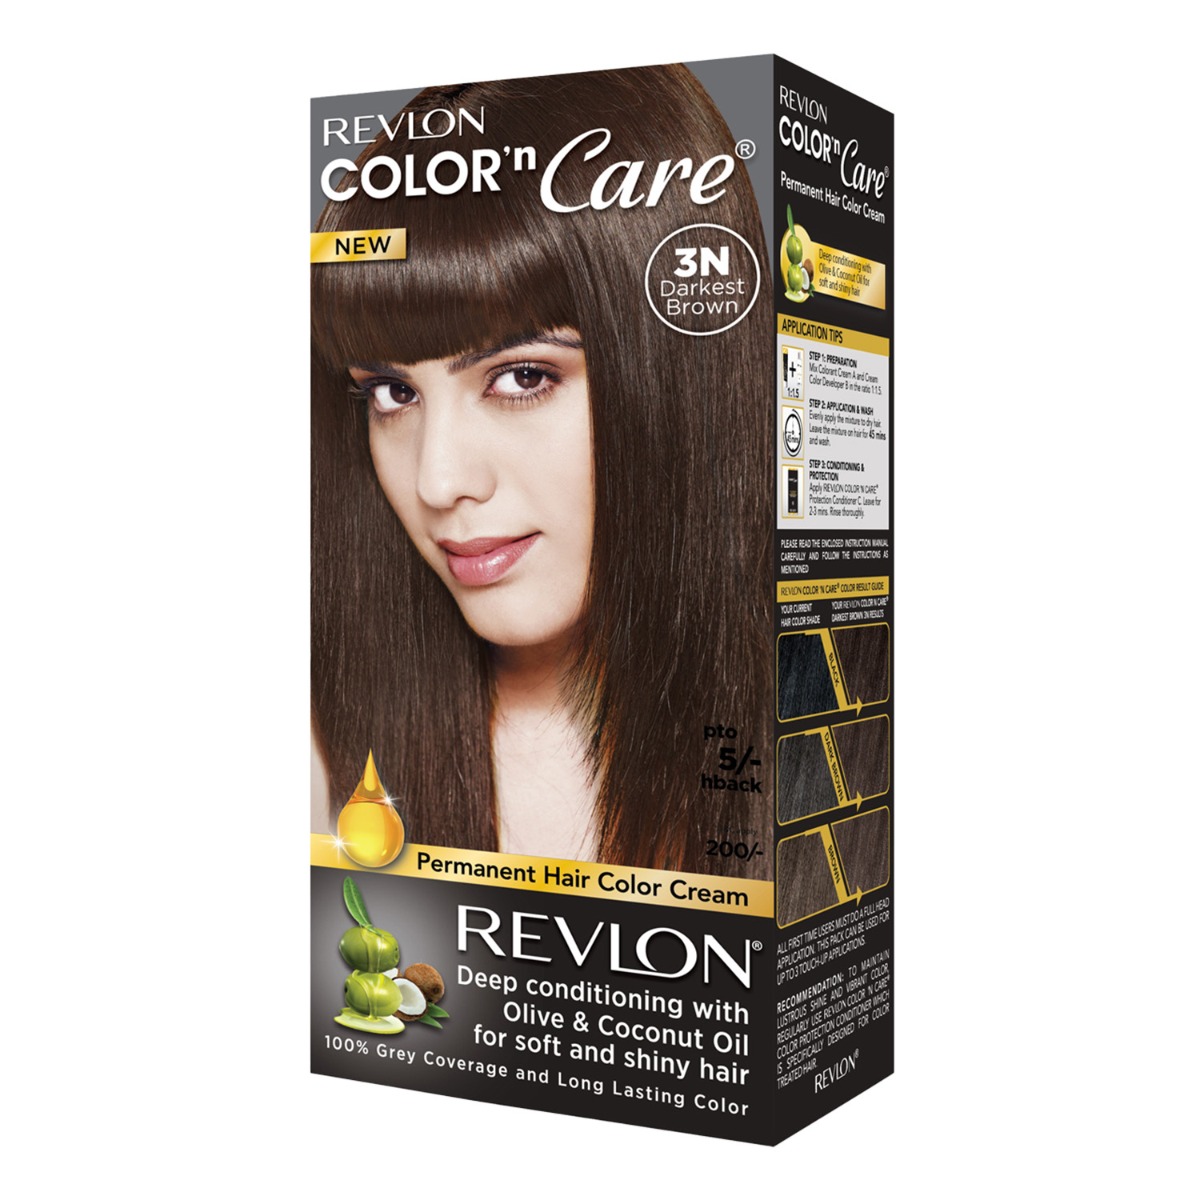 Revlon Color N Care Permanent Hair Color Cream - Darkest Brown 3N, 40gm+60ml+7.5ml